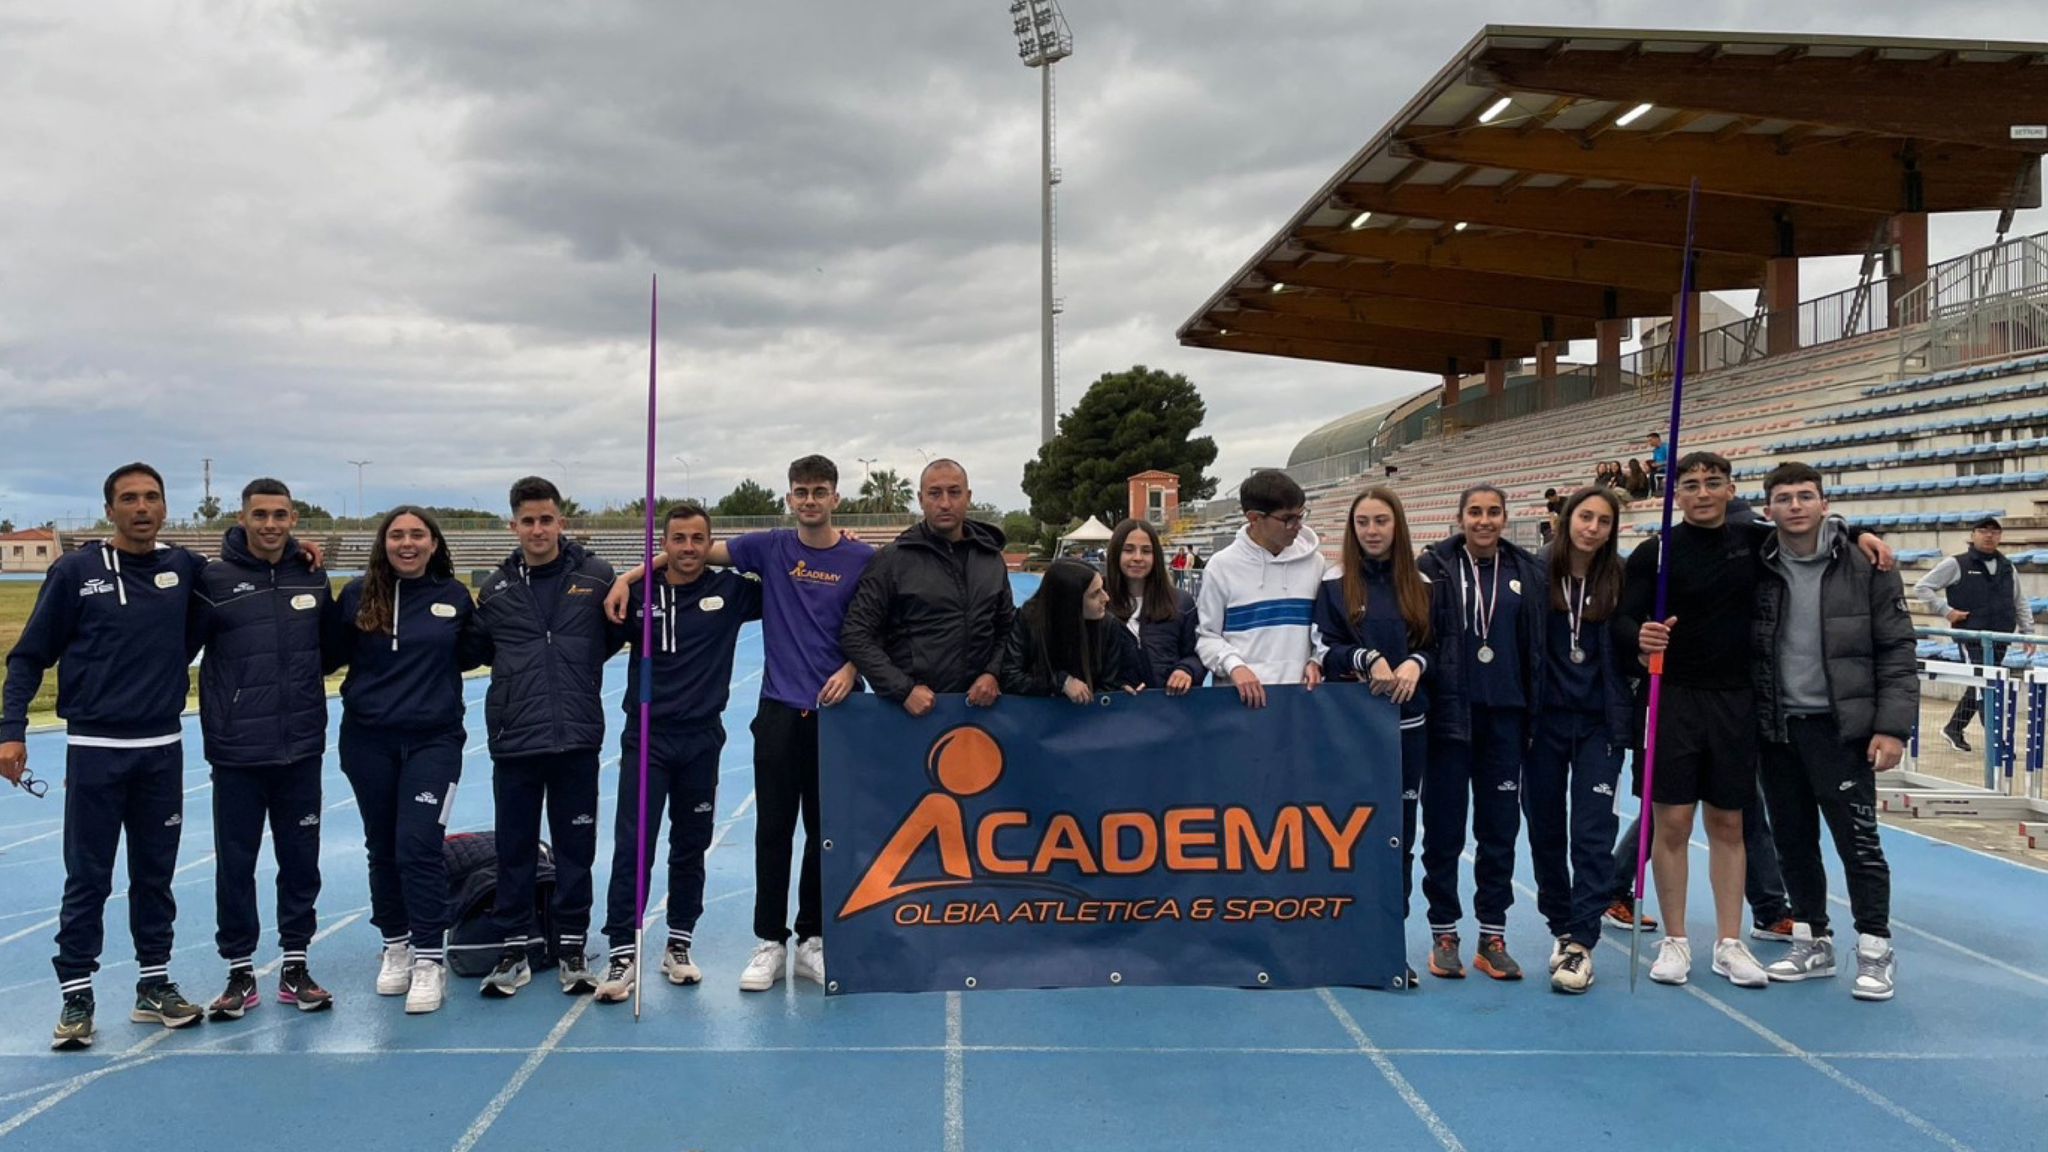 Academy Olbia Atletica: ottimi risultati ai campionati sardi assoluti su pista